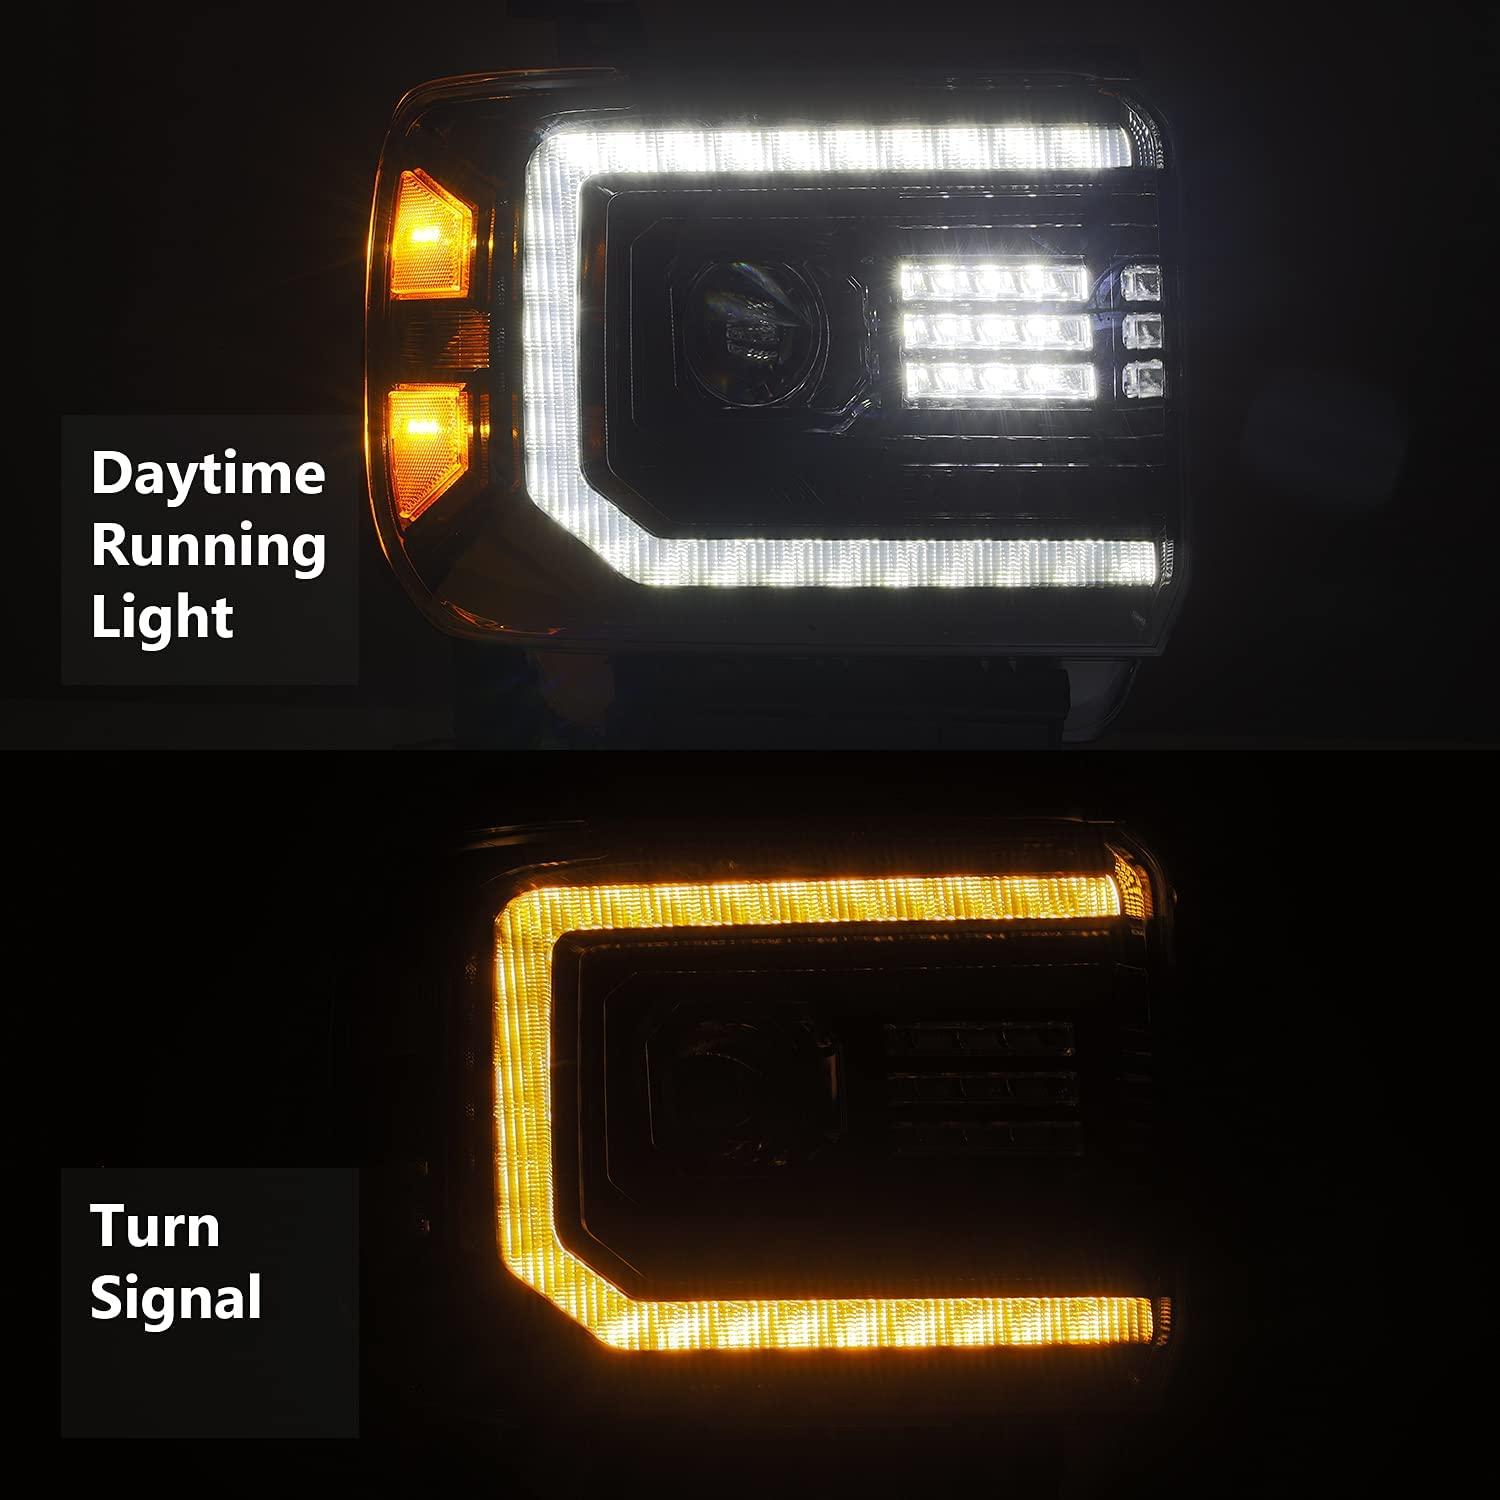 2014-2018 GMC Sierra | AlphaRex LUXX-Series LED Projector Headlights Alpha-Black - Truck Accessories Guy